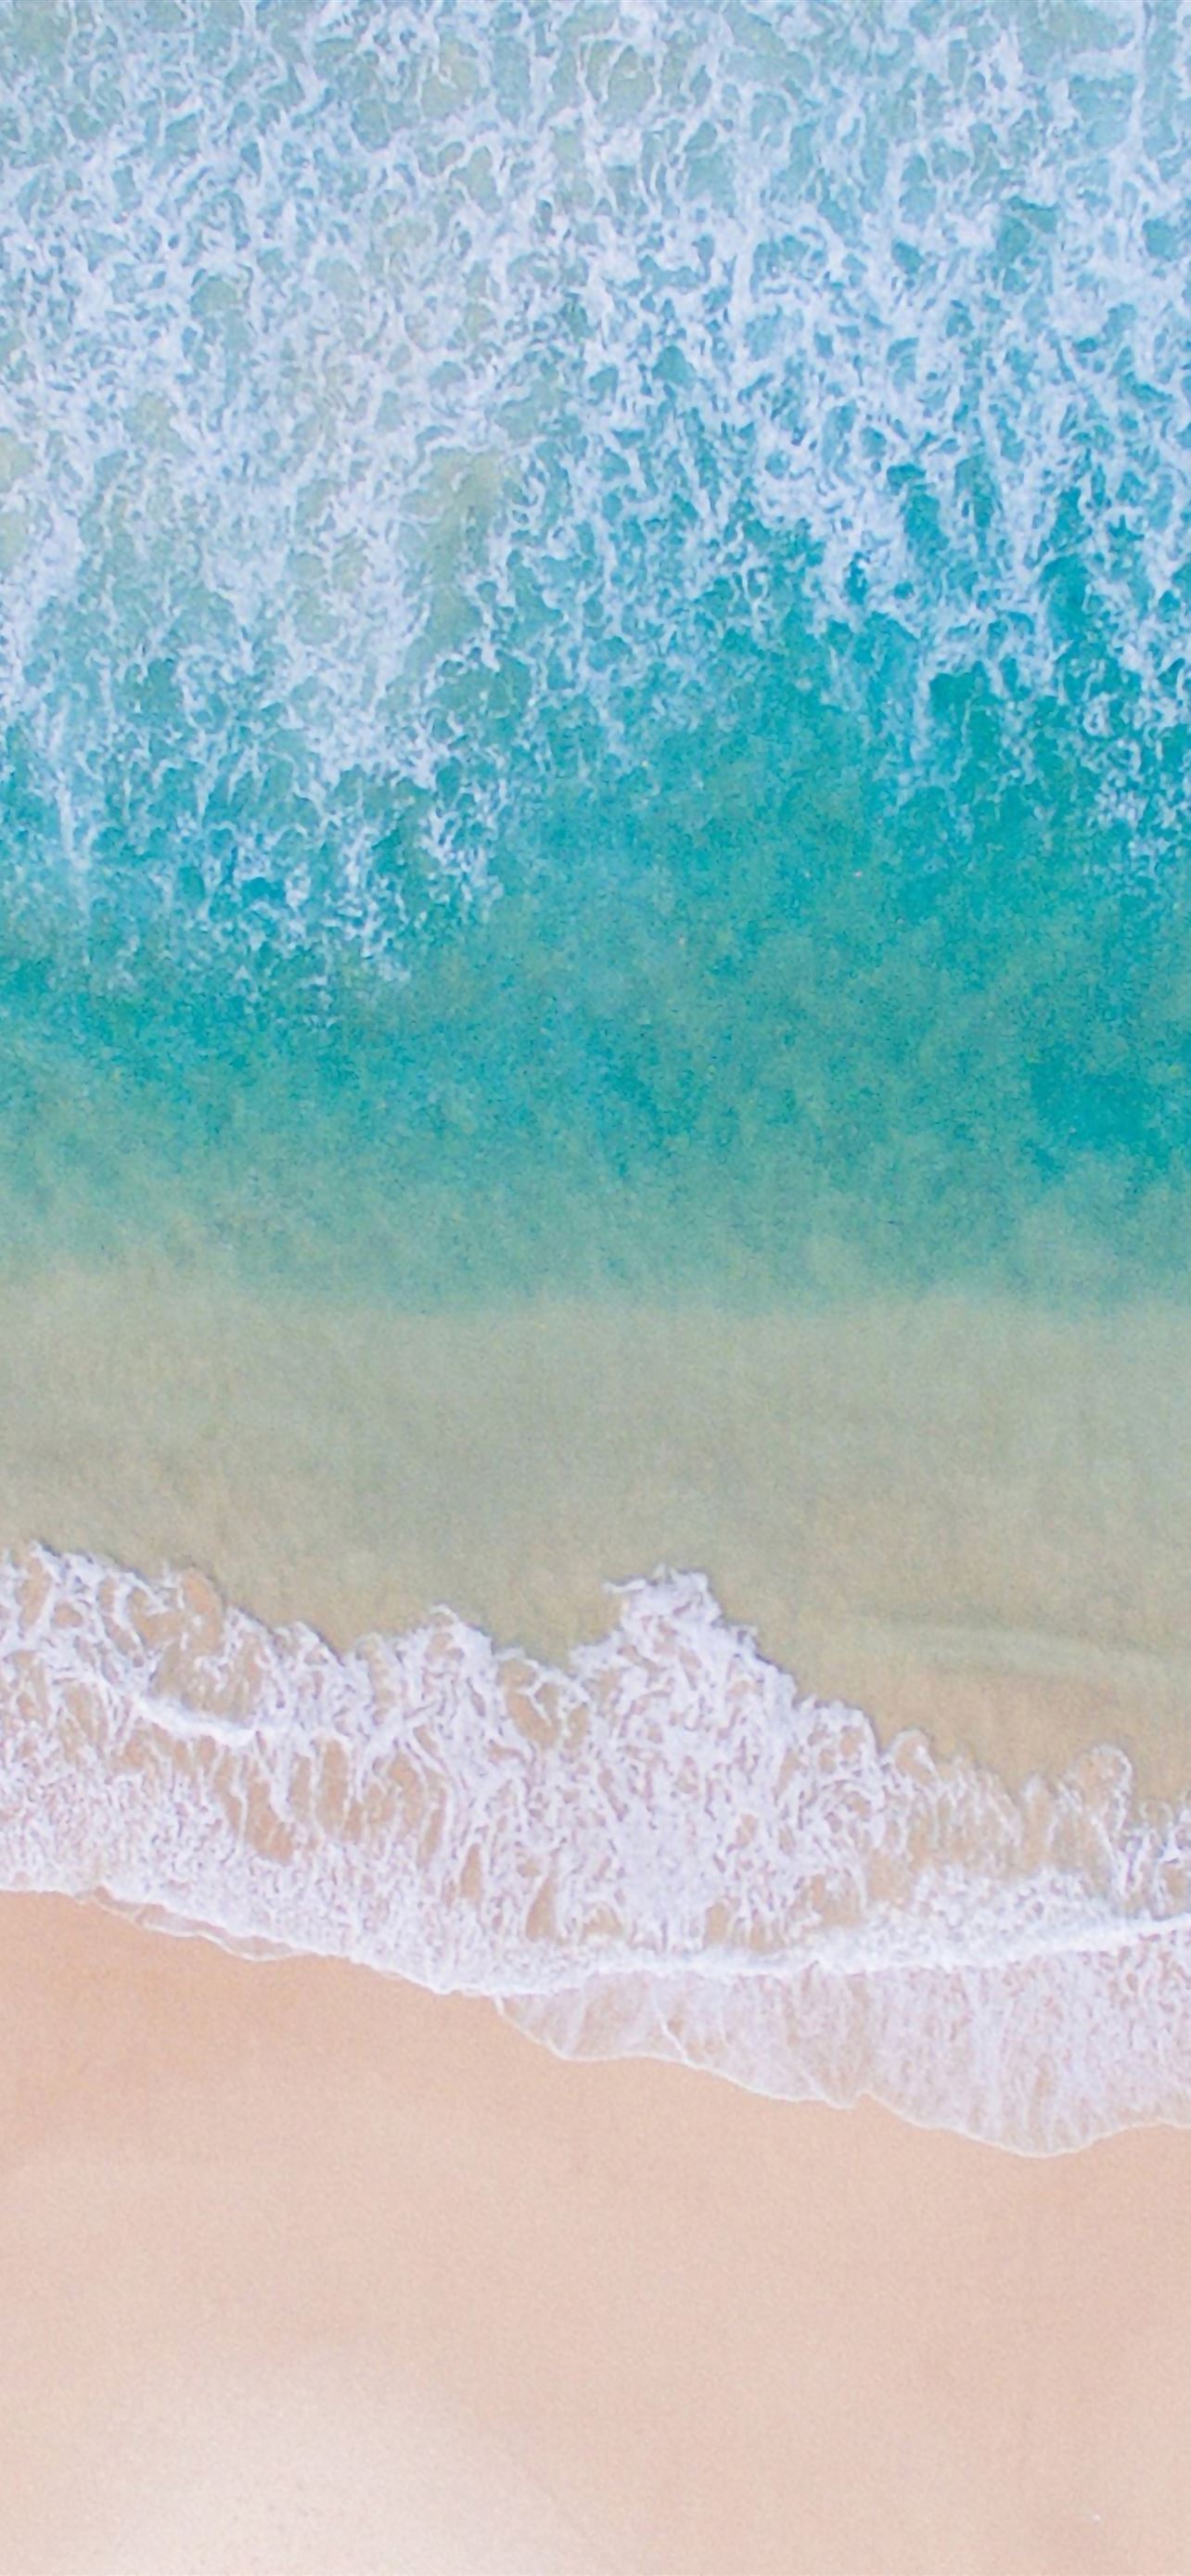 32+] Blue Sea Beach HD Wallpaper - WallpaperSafari